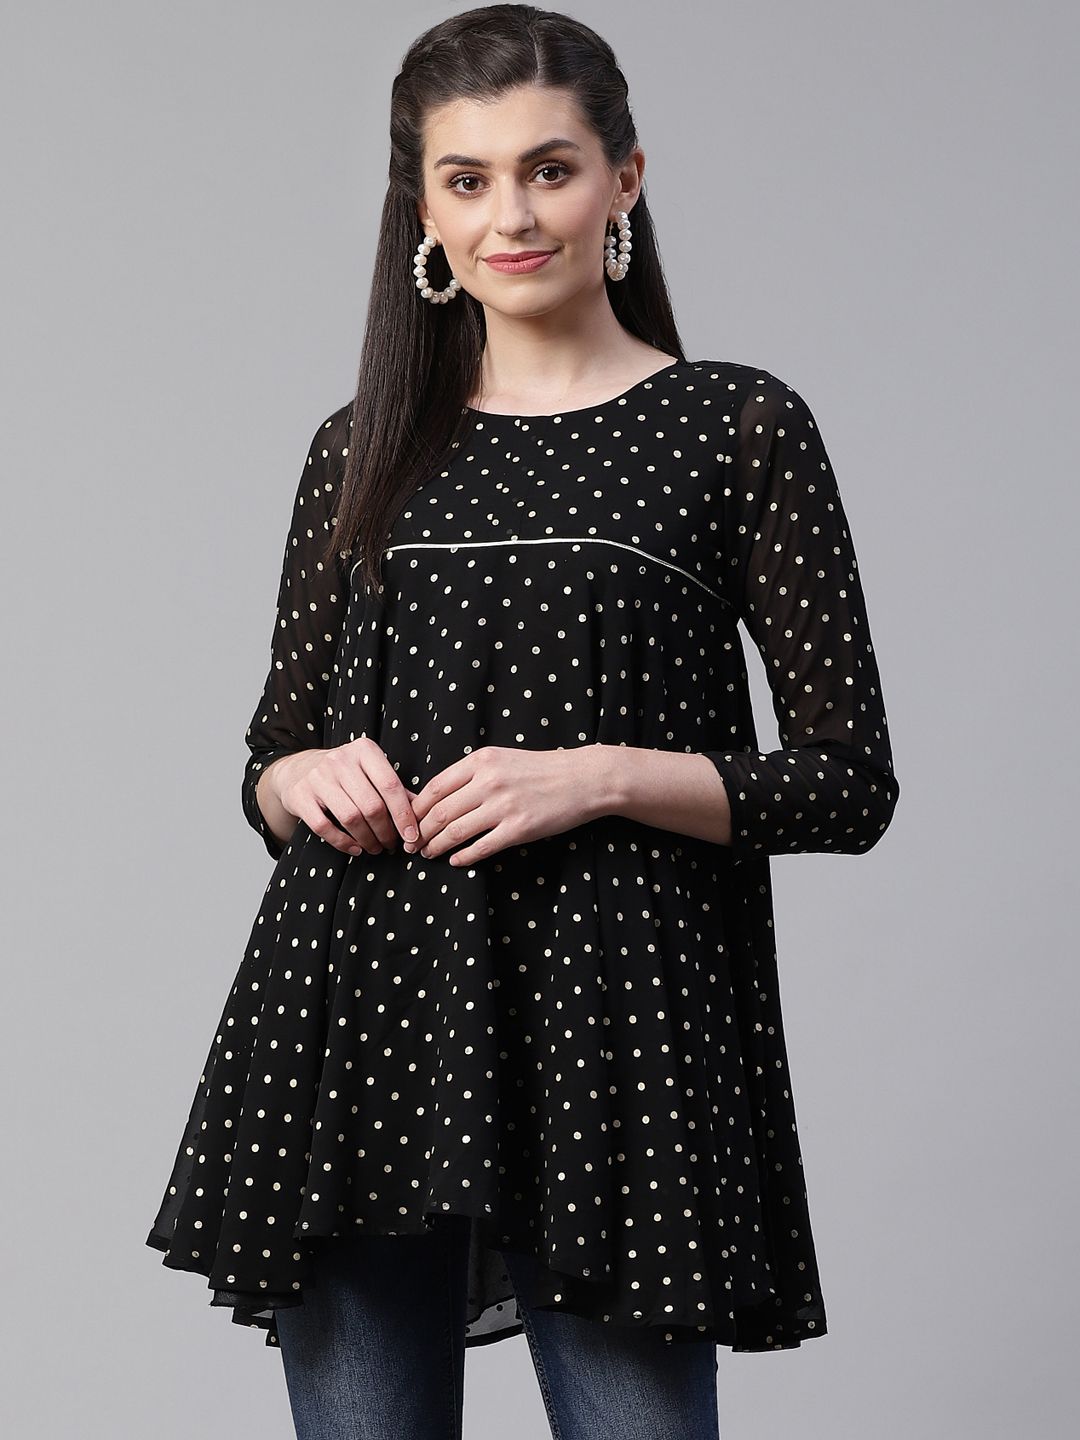 Ahalyaa Women's Black & White Polka Dots Print A-Line Tunic Price in India